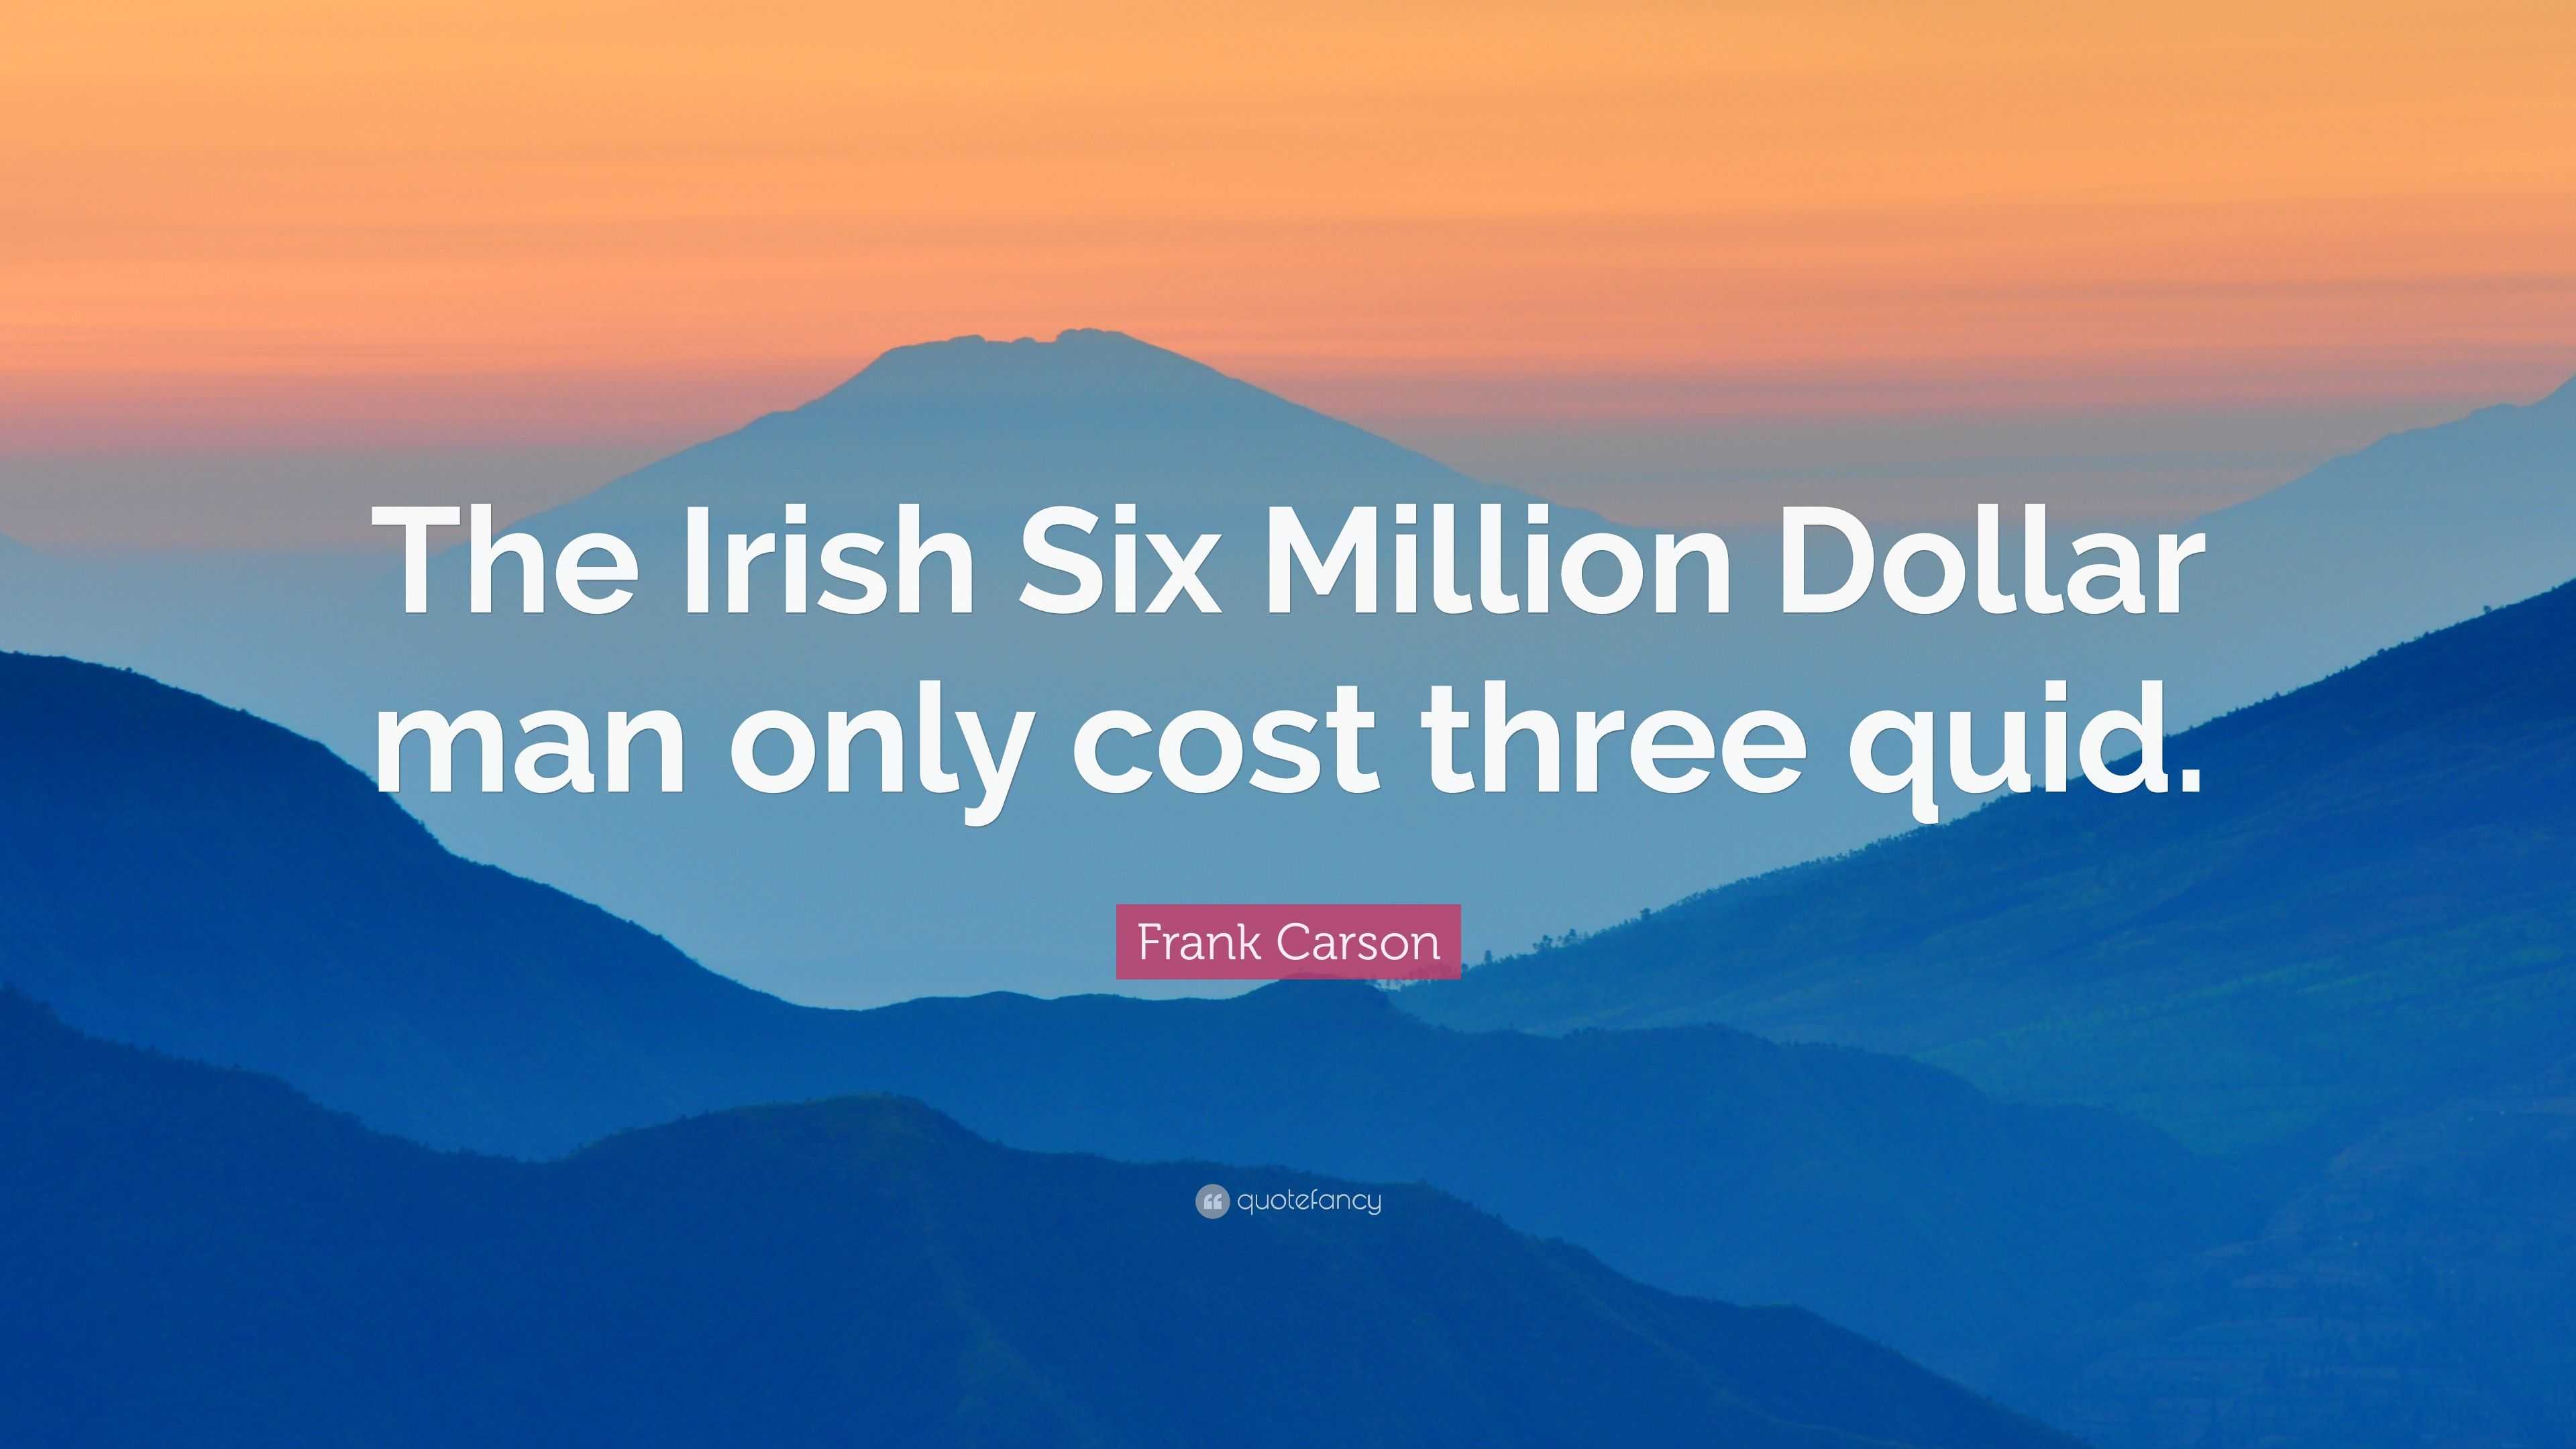 Frank Carson Quote The Irish Six Million Dollar Man Only Cost Three Quid